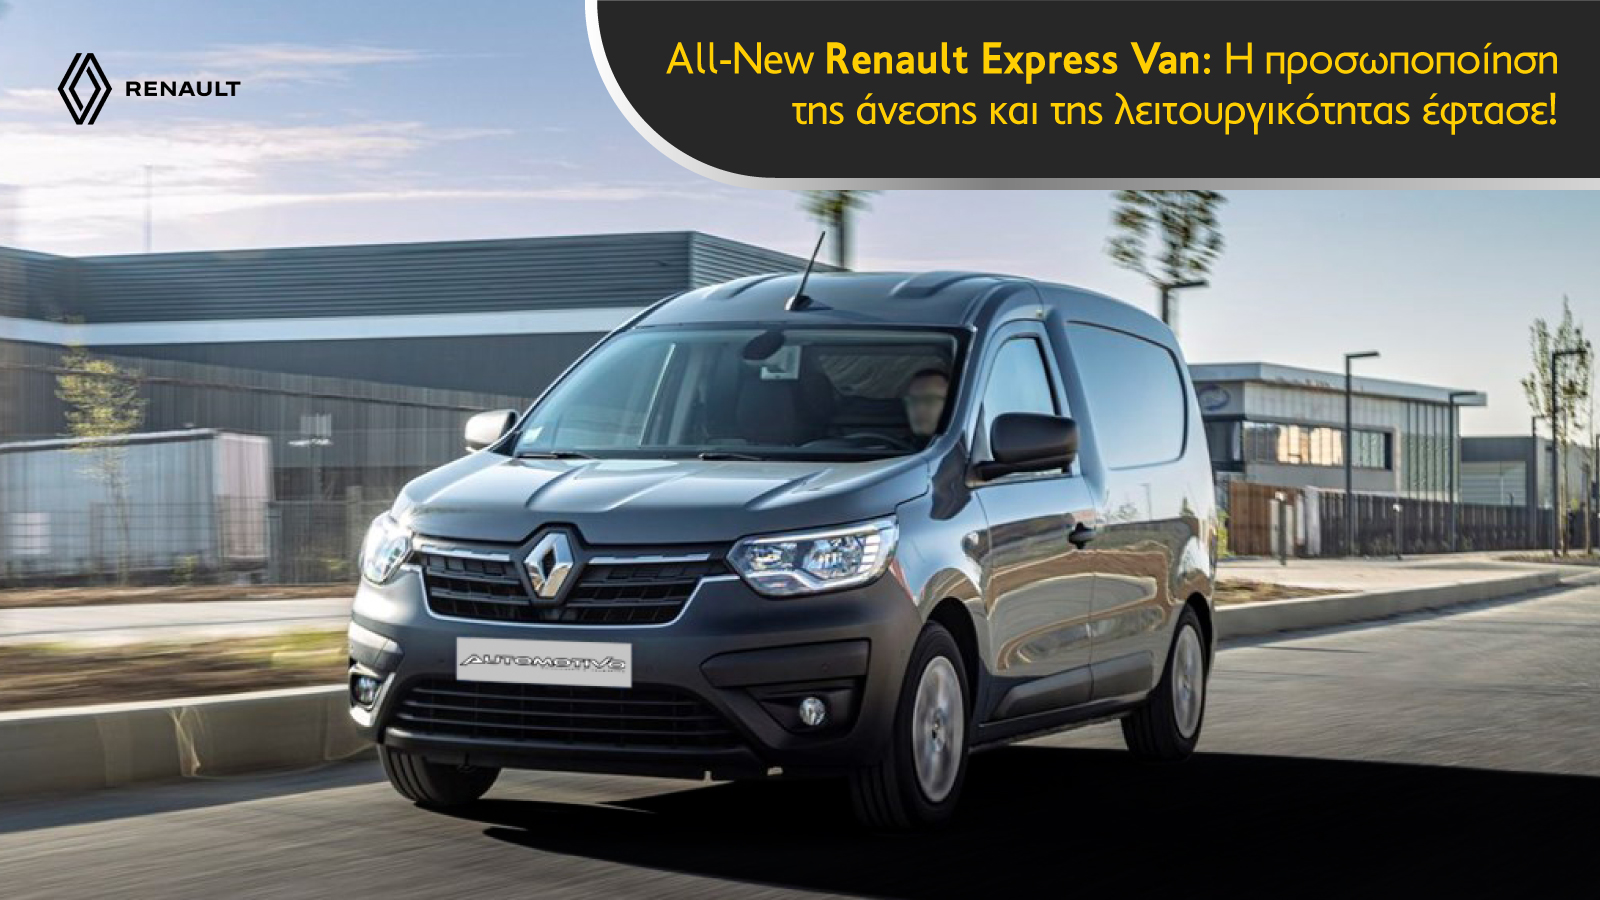 All-New Renault Express Van: Το απόλυτο επαγγελματικό όχημα!